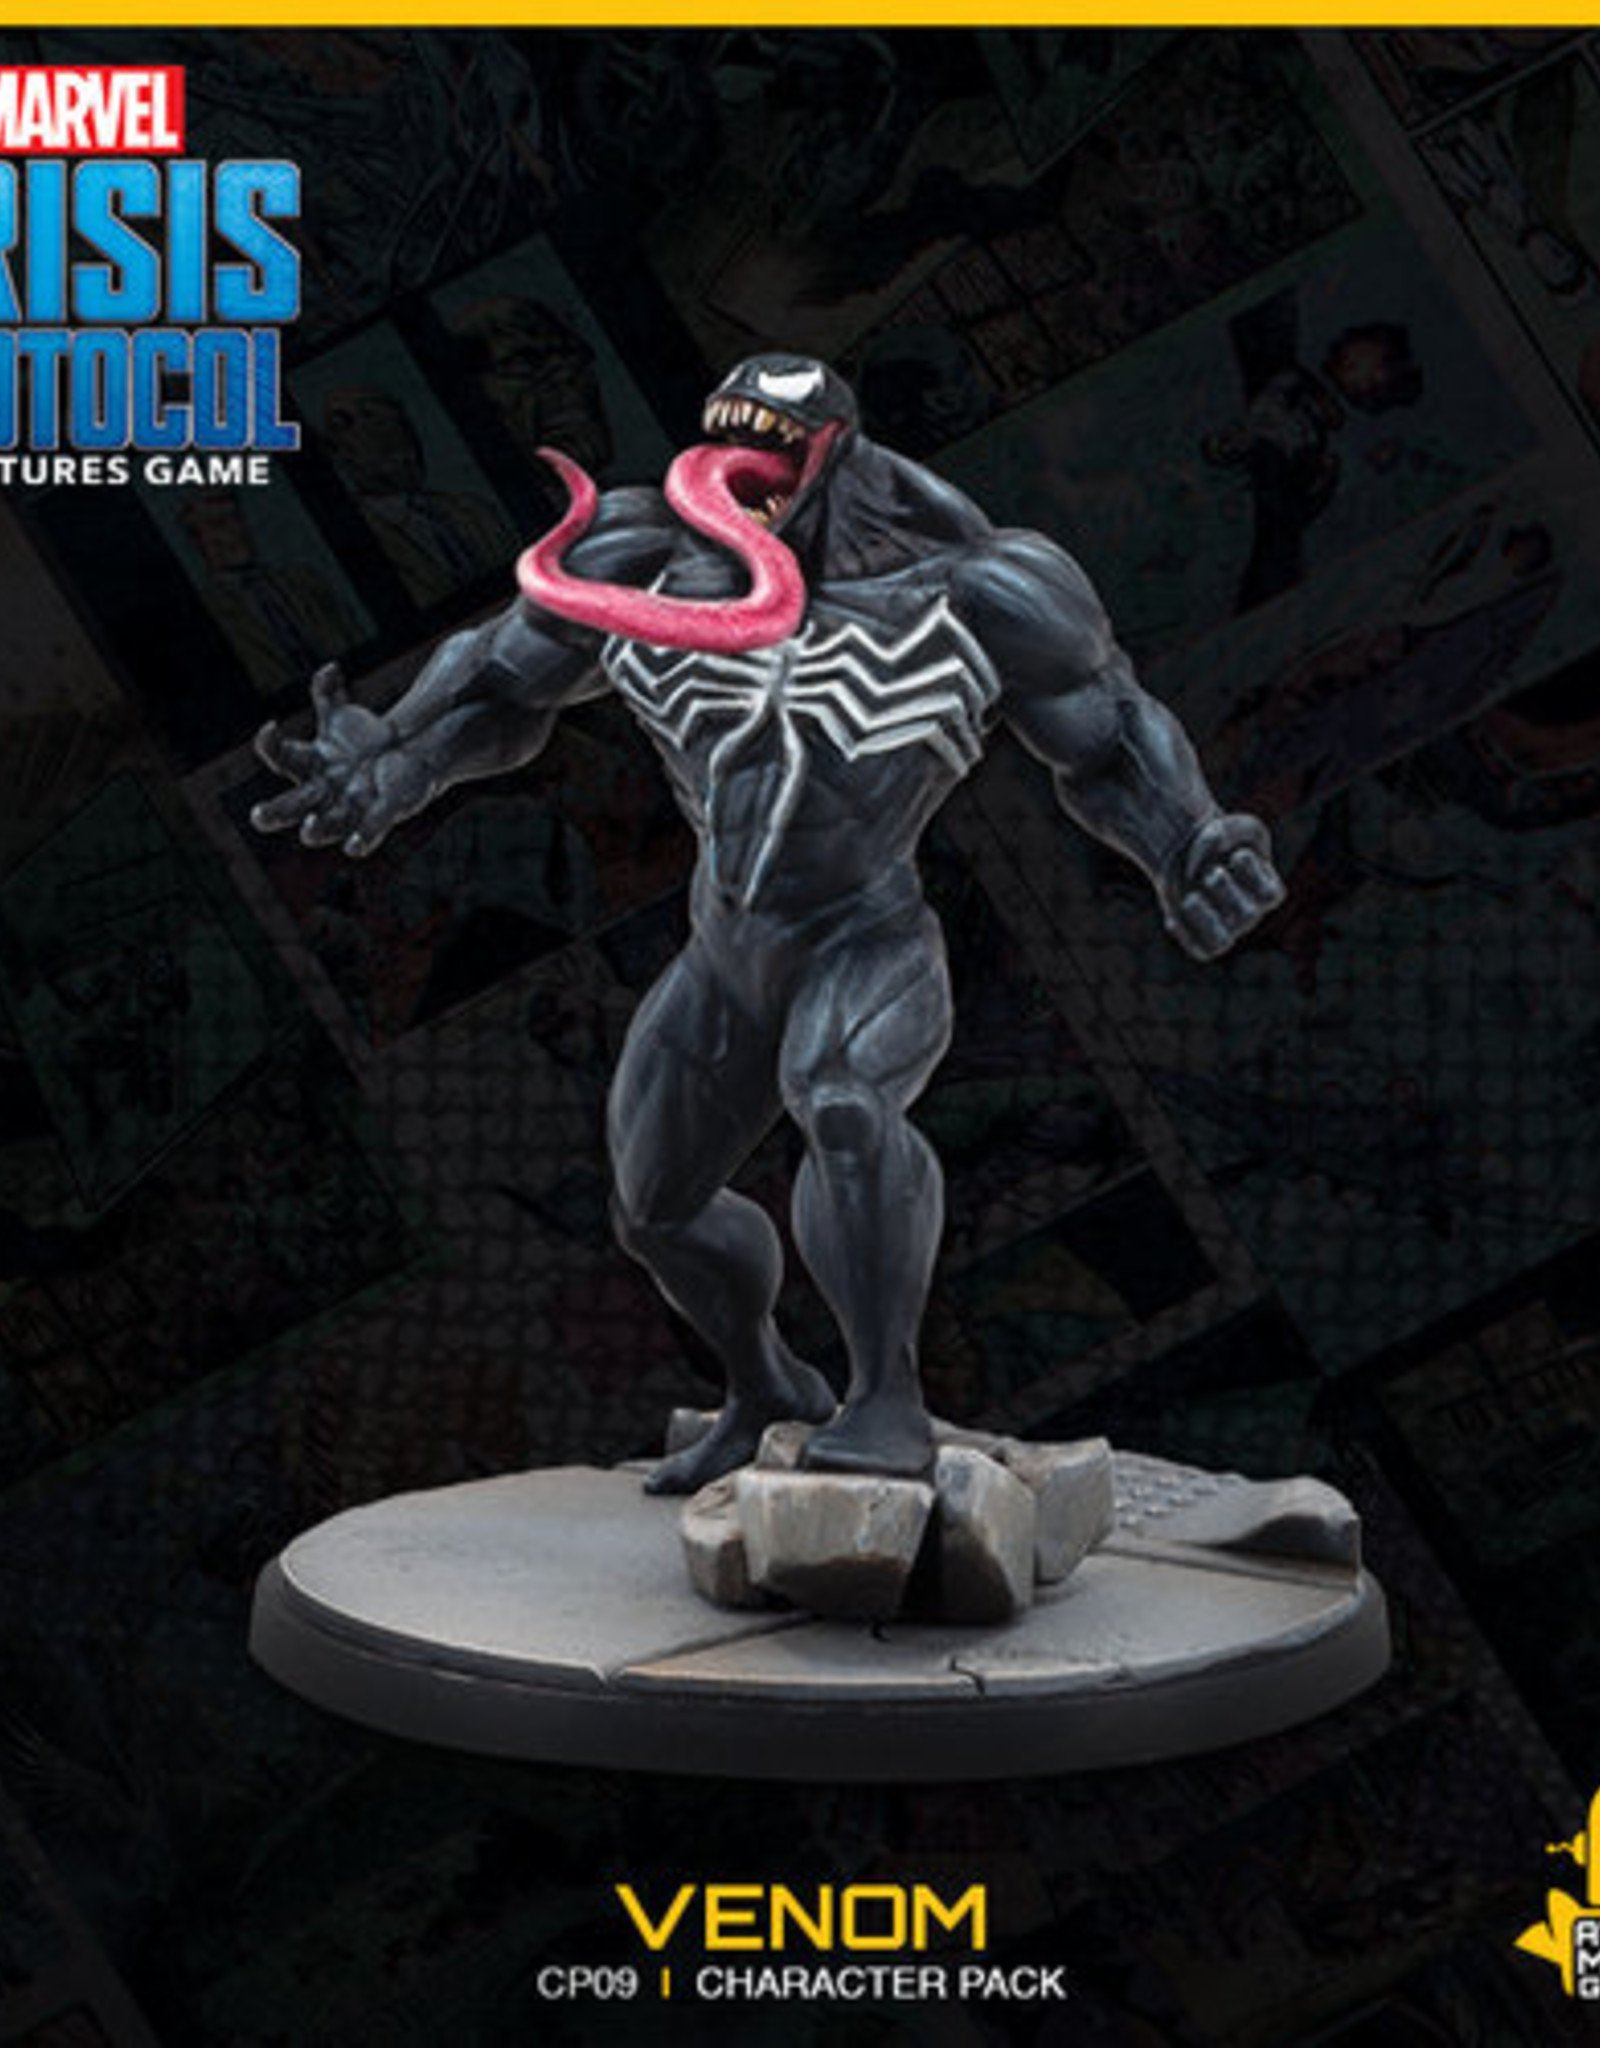 Atomic Mass Marvel Crisis Protocol - Venom Character Pack